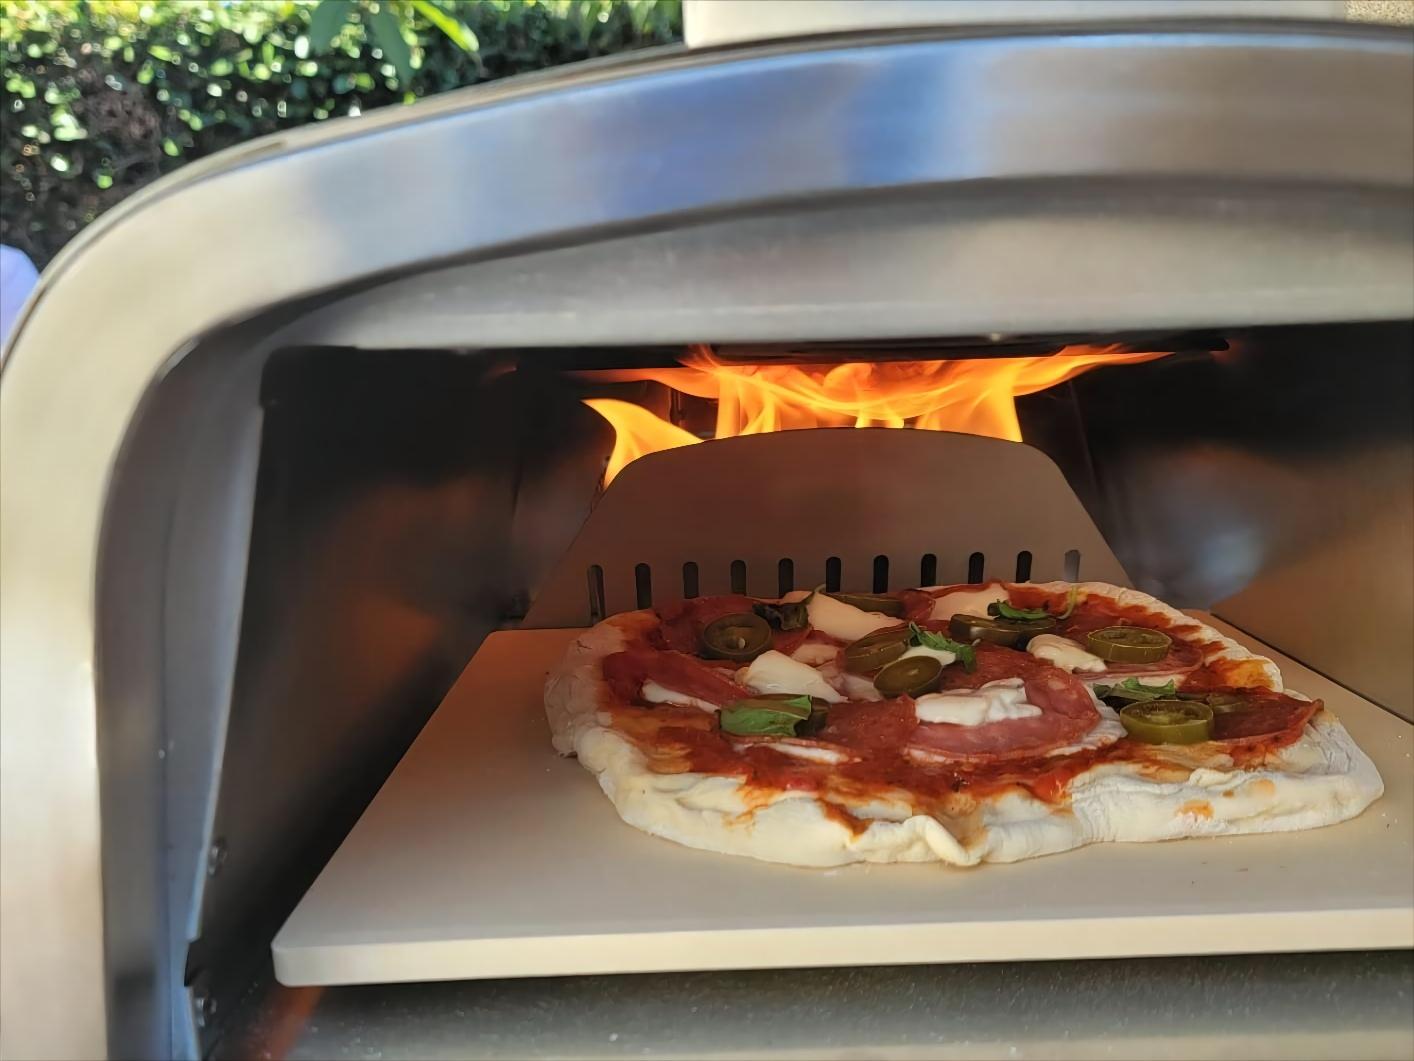  PIZZELLO 16 Portable Pellet Pizza Oven Outdoor Wood Fired Pizza  Ovens Included Pizza Stone, Pizza Peel, Fold-up Legs, Cover, Pizzello Forte  (Black) : Patio, Lawn & Garden